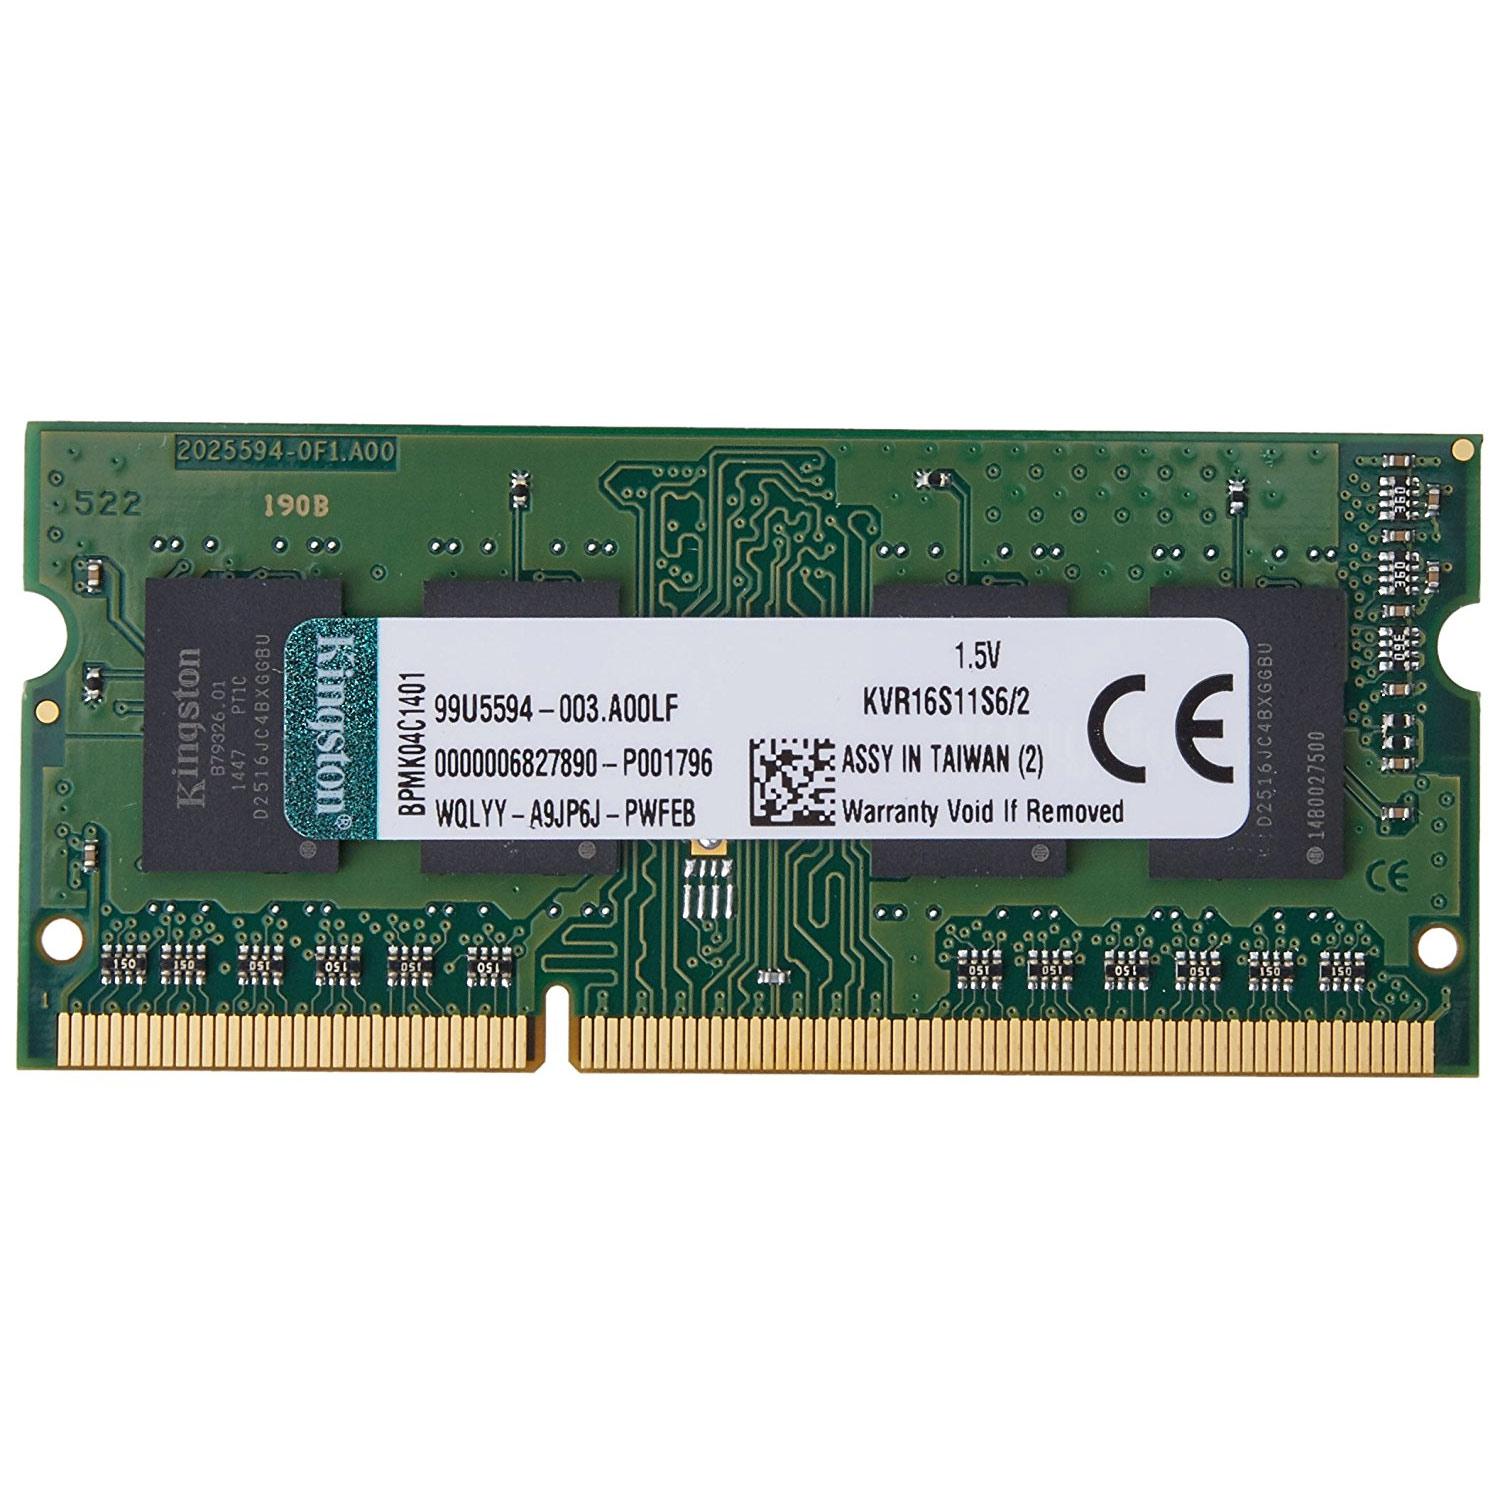 Kingston ValueRAM 2GB 1600MHz DDR3 Non-ECC 204-Pin CL11 SODIMM Laptop Memory Module